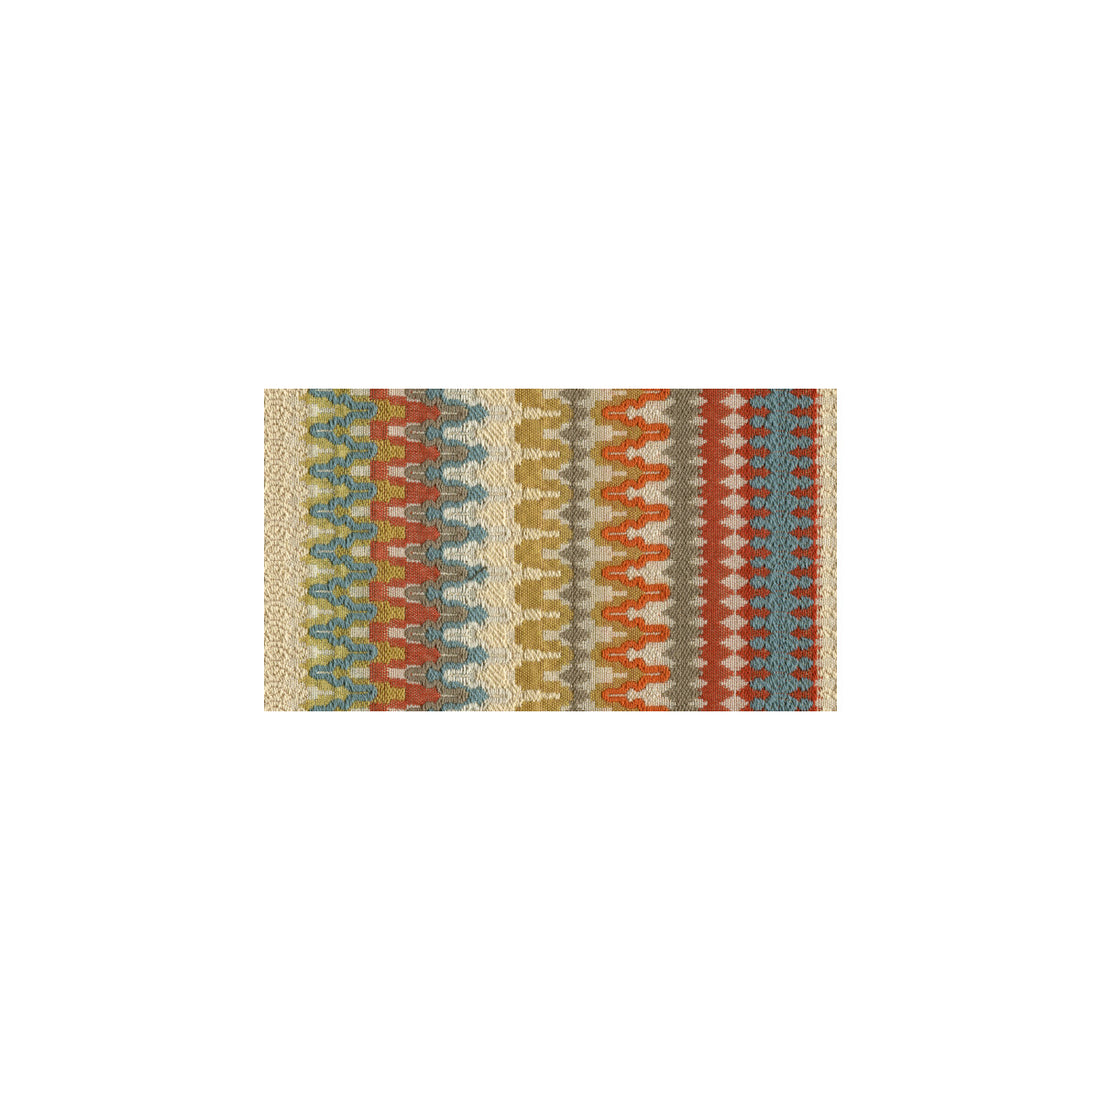 Kravet Design fabric in 32530-512 color - pattern 32530.512.0 - by Kravet Design in the Gis collection